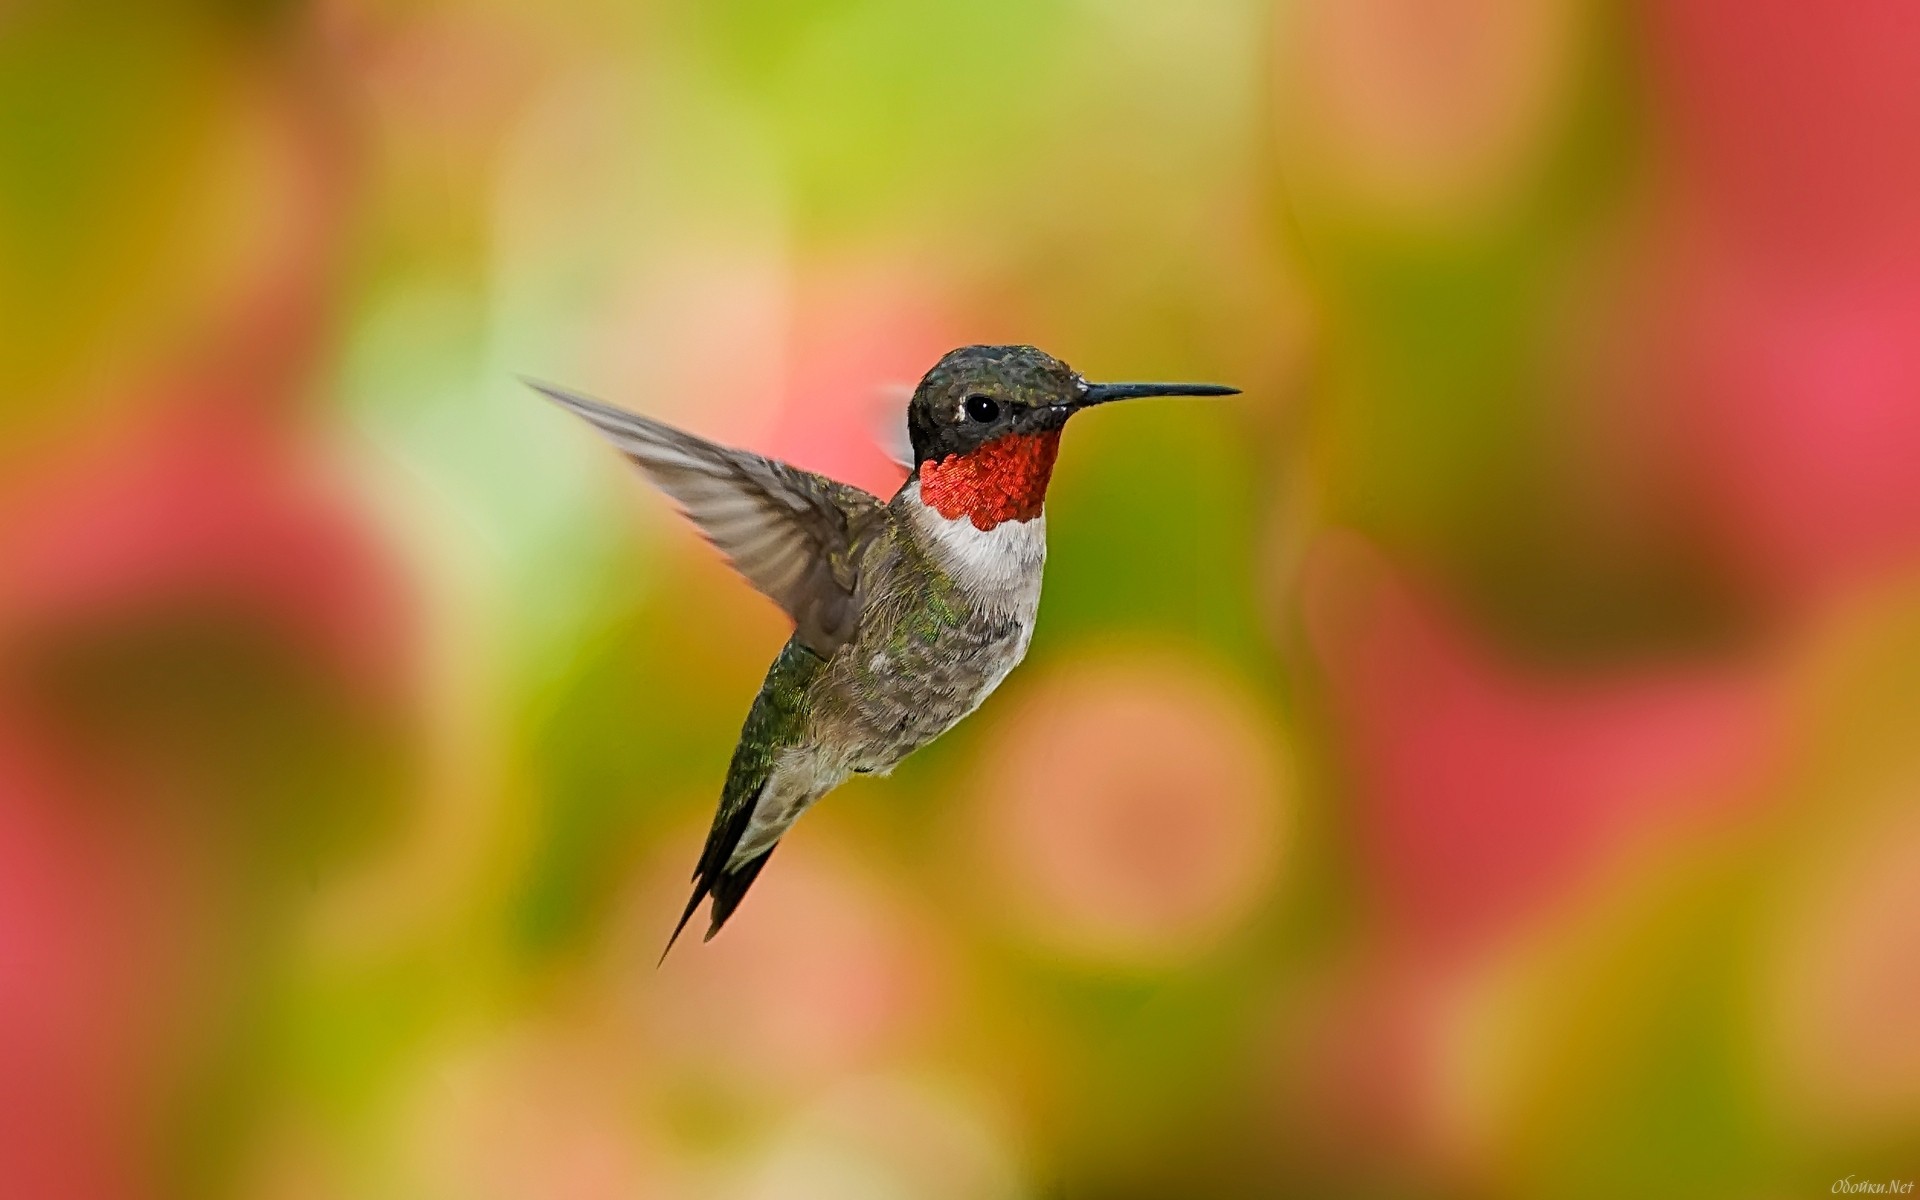 276689 descargar imagen aves, animales, colibrí, ave: fondos de pantalla y protectores de pantalla gratis